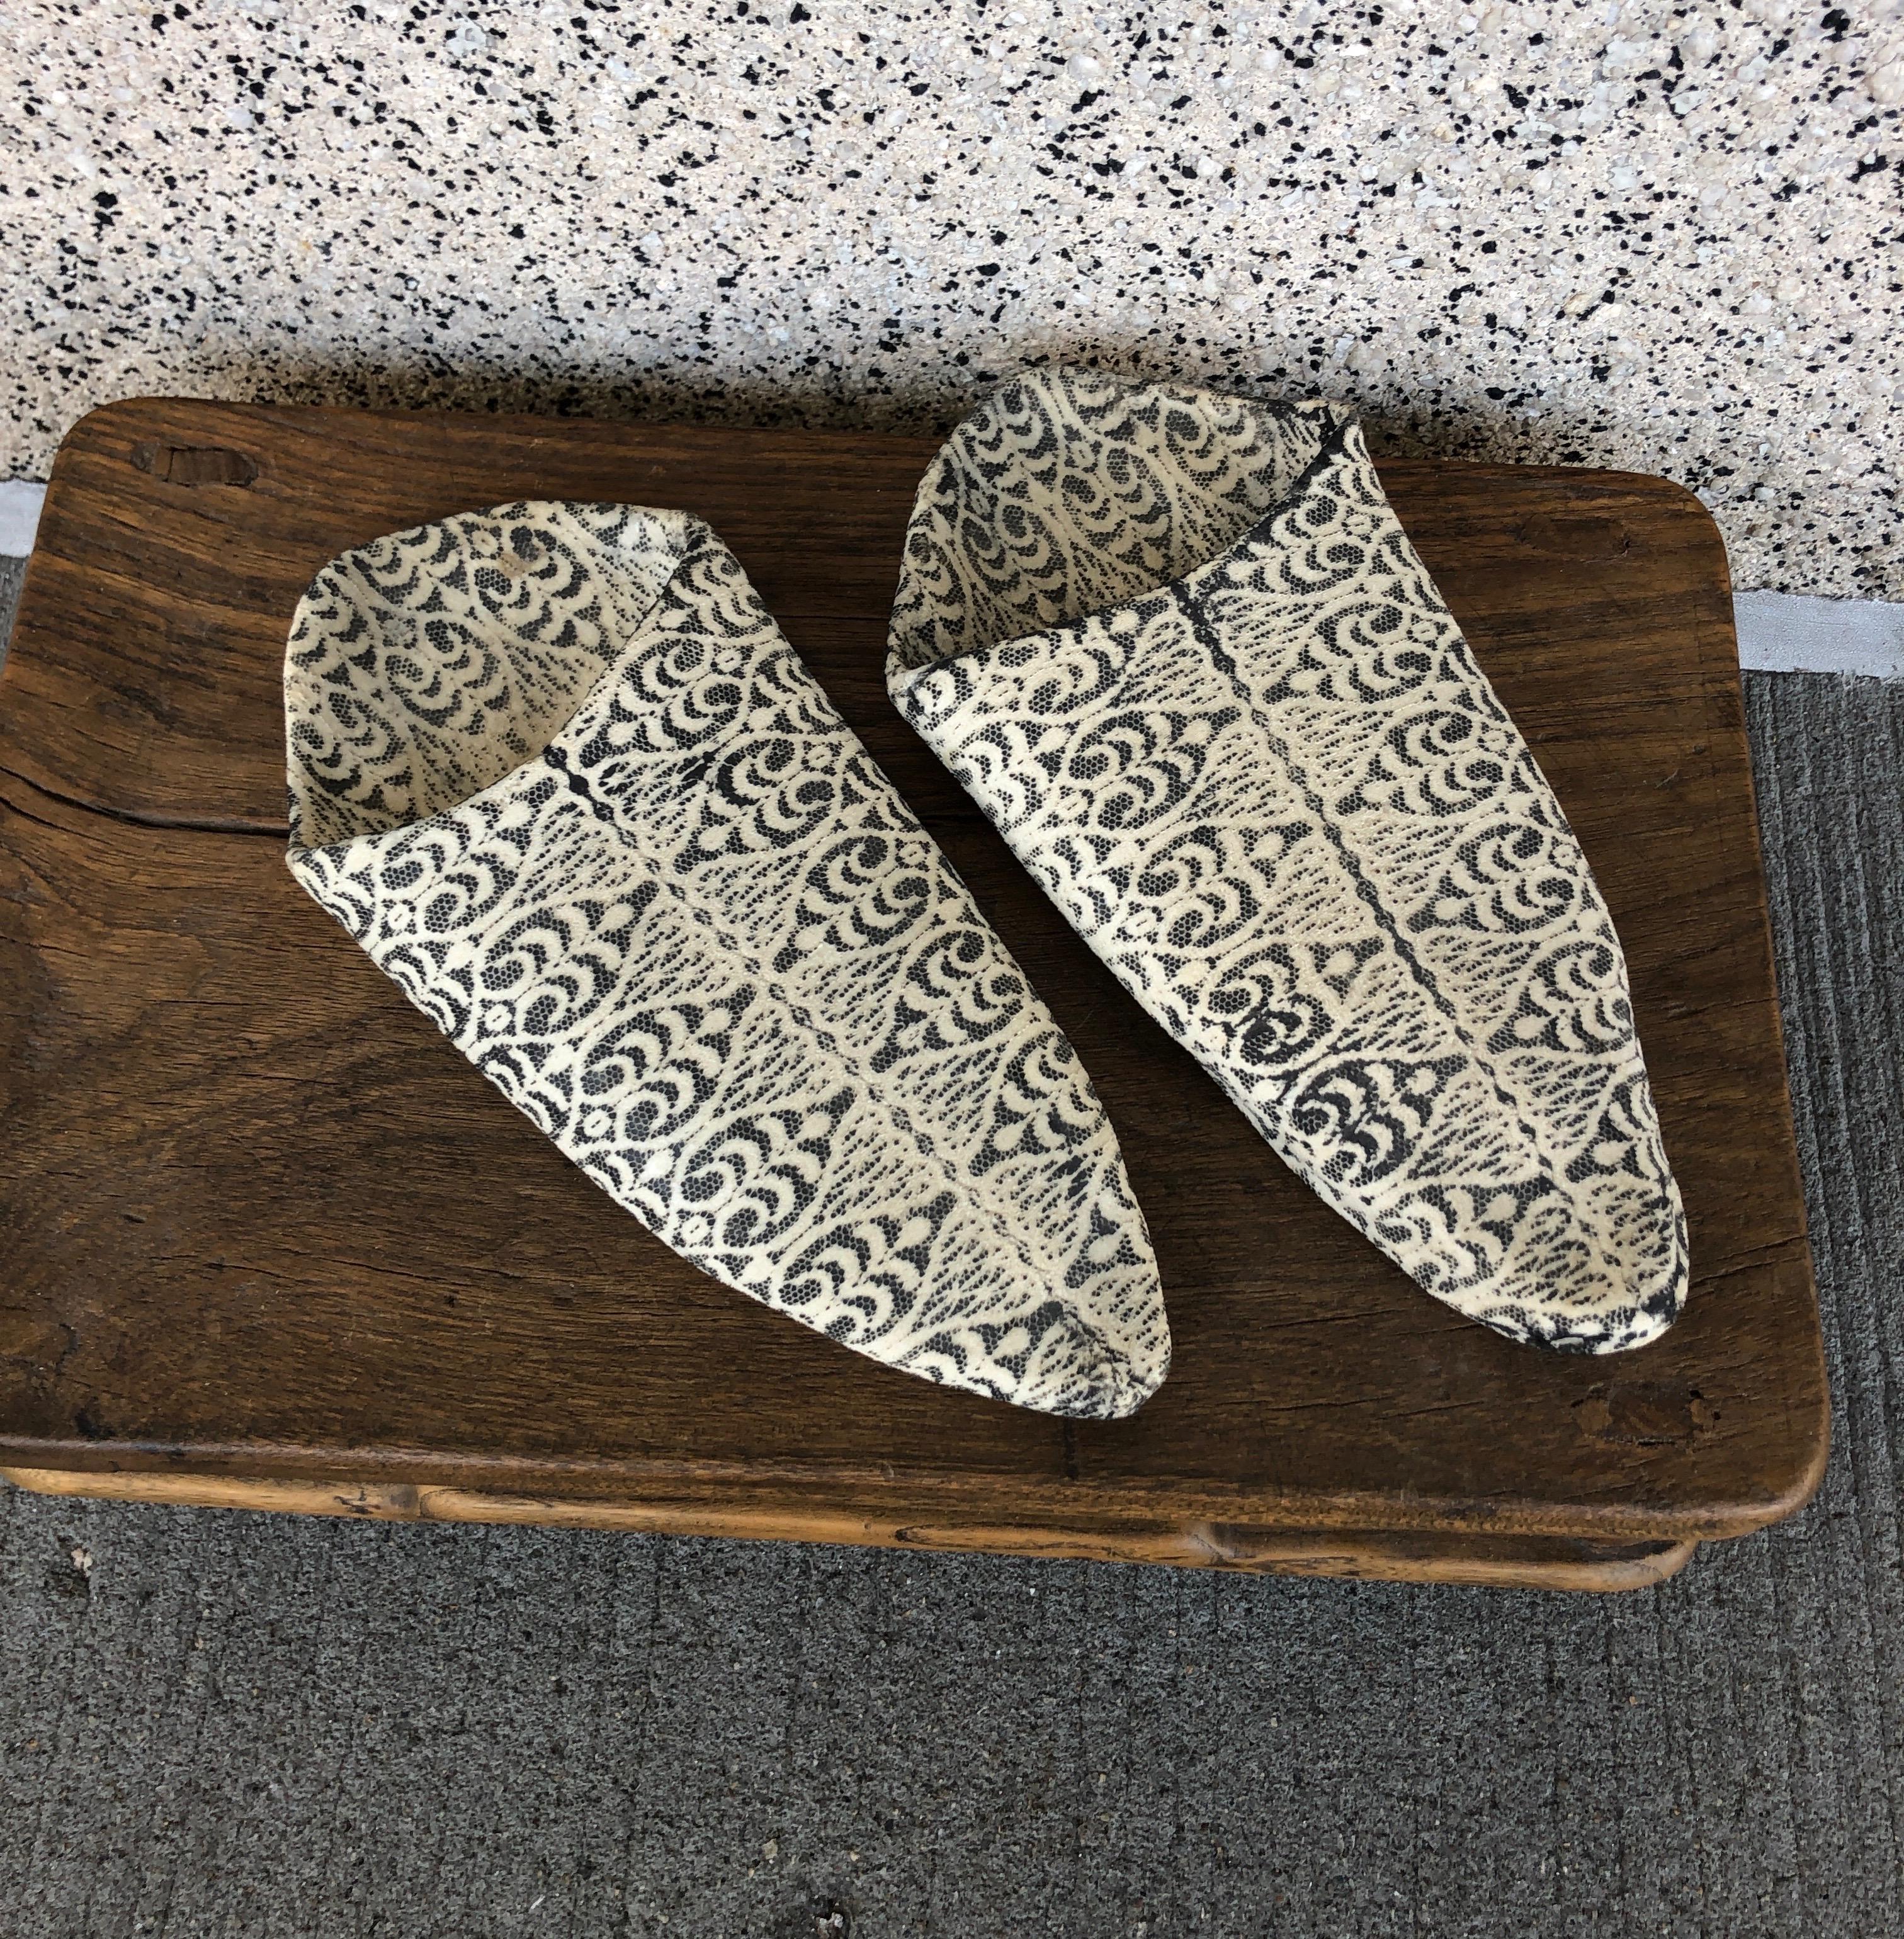 American Handmade Contemporary Ceramic Slippers